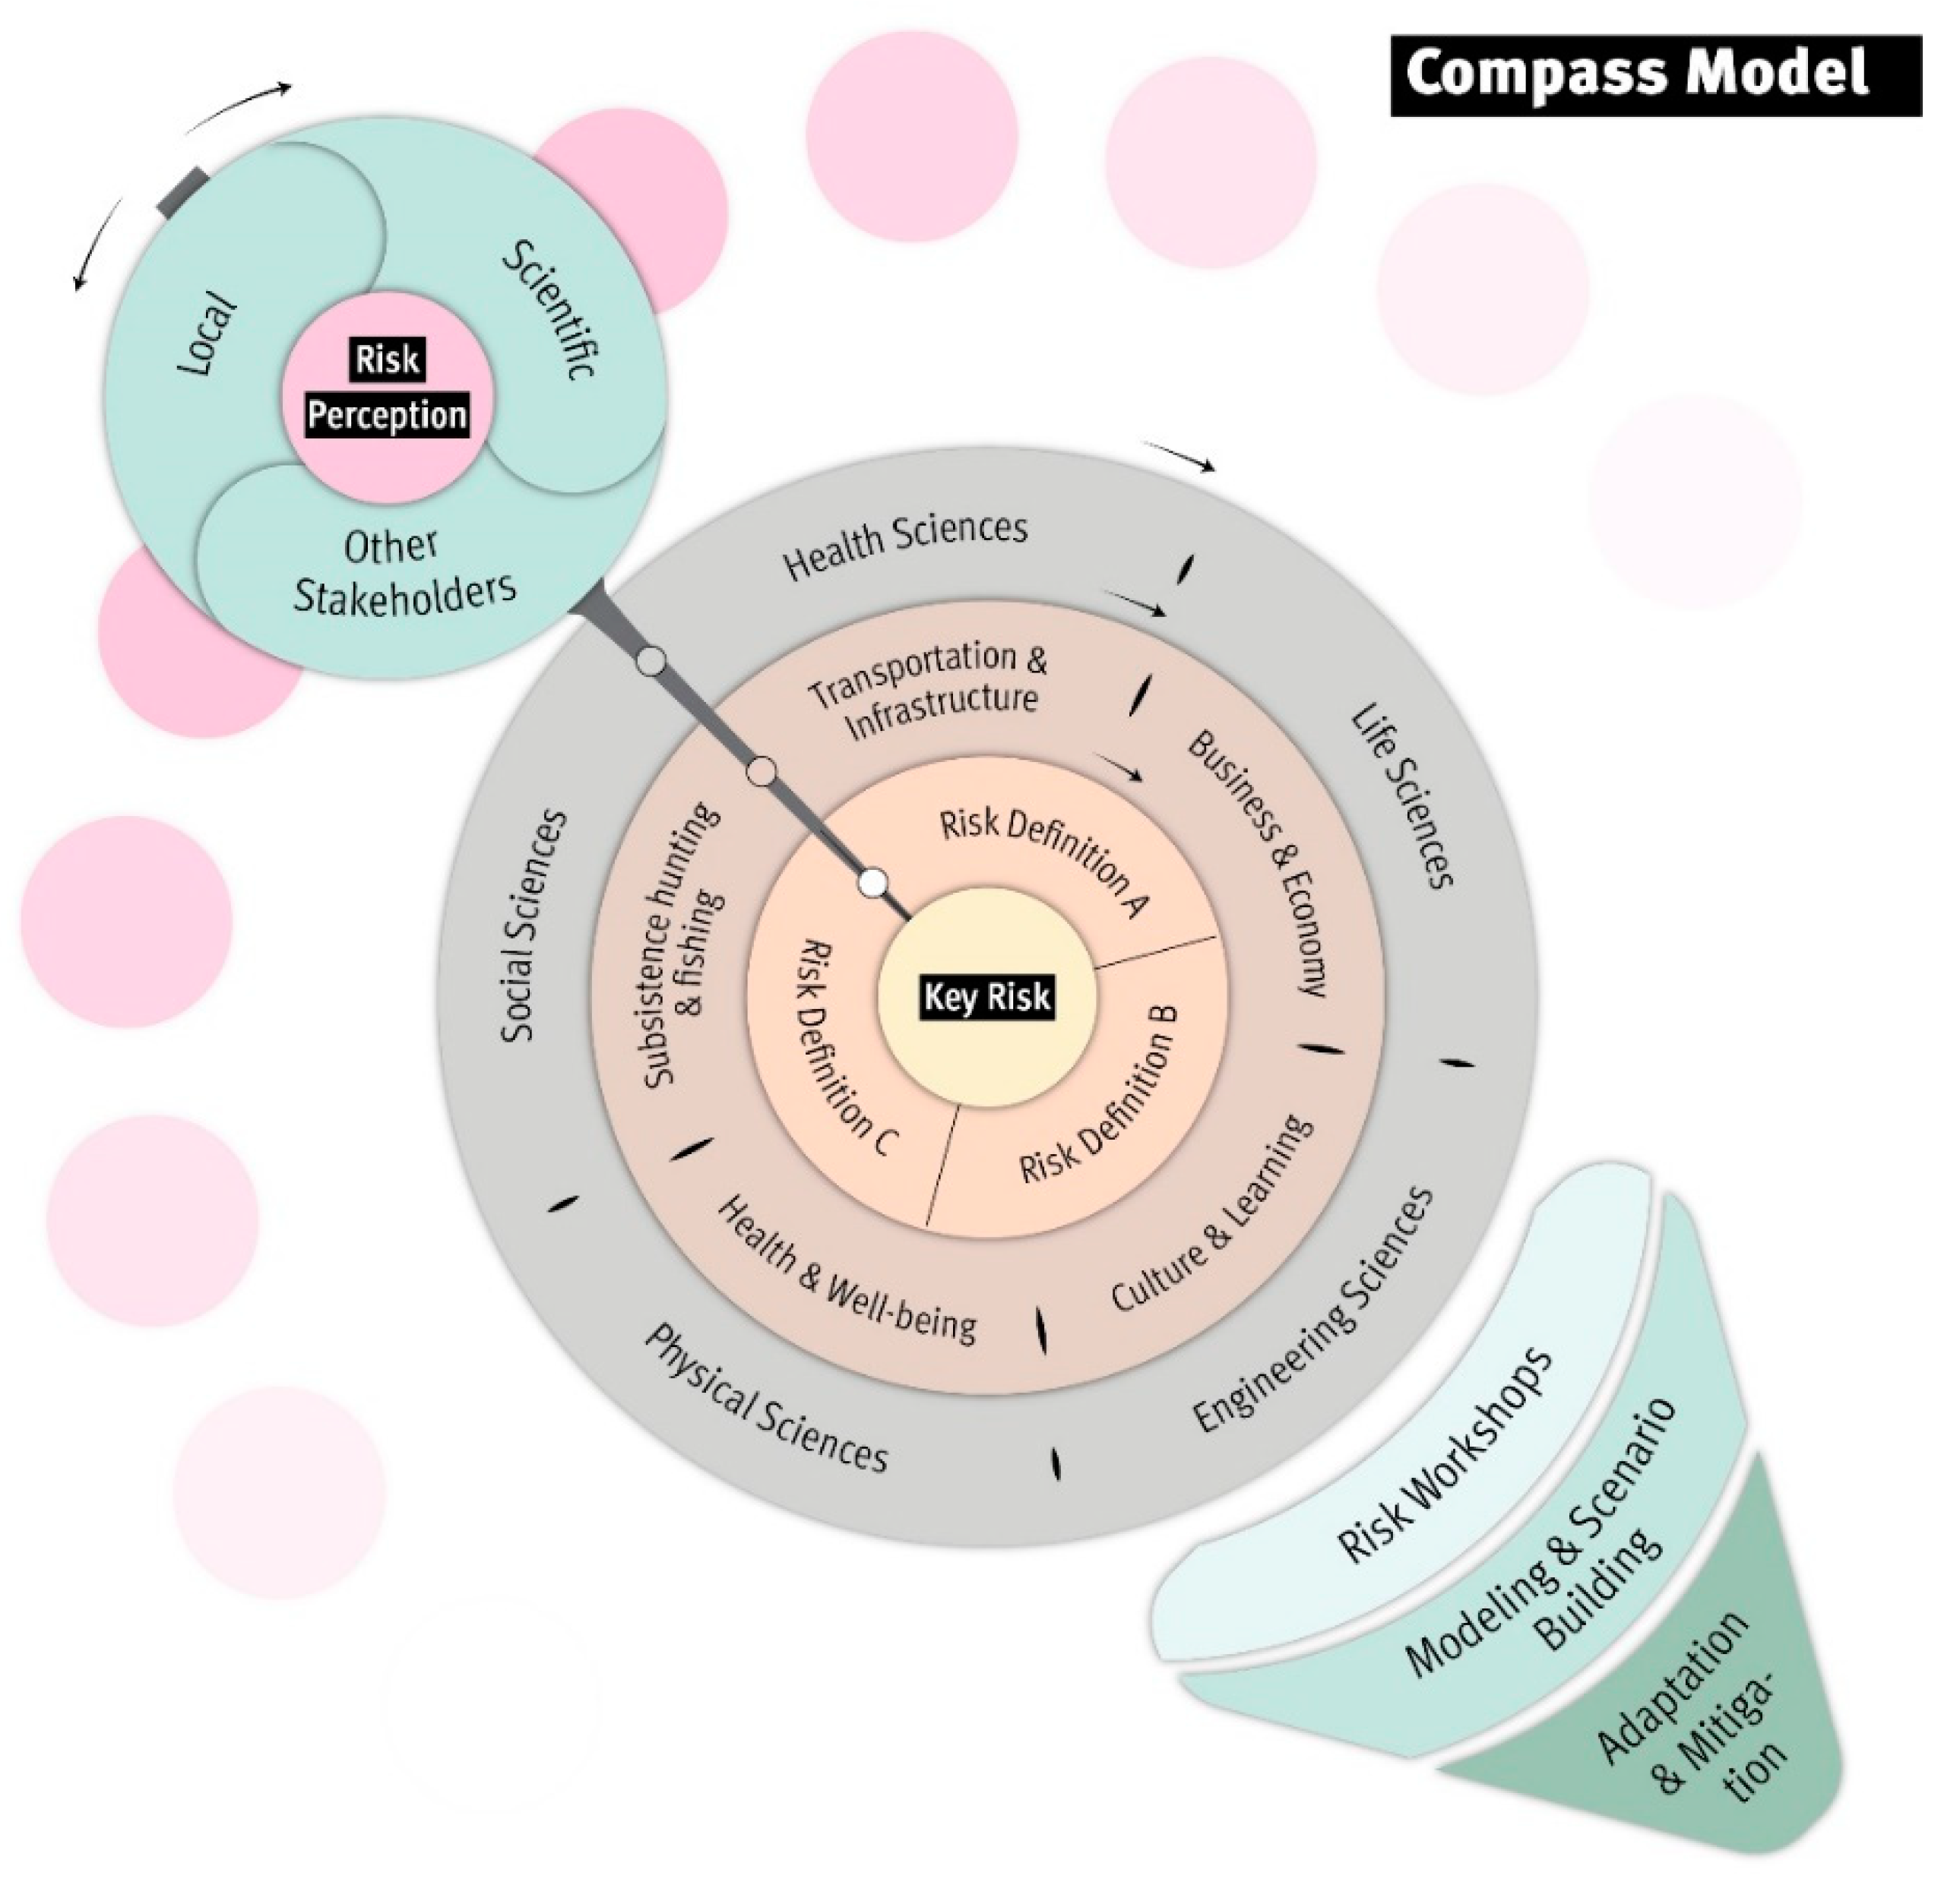 Risk compass model